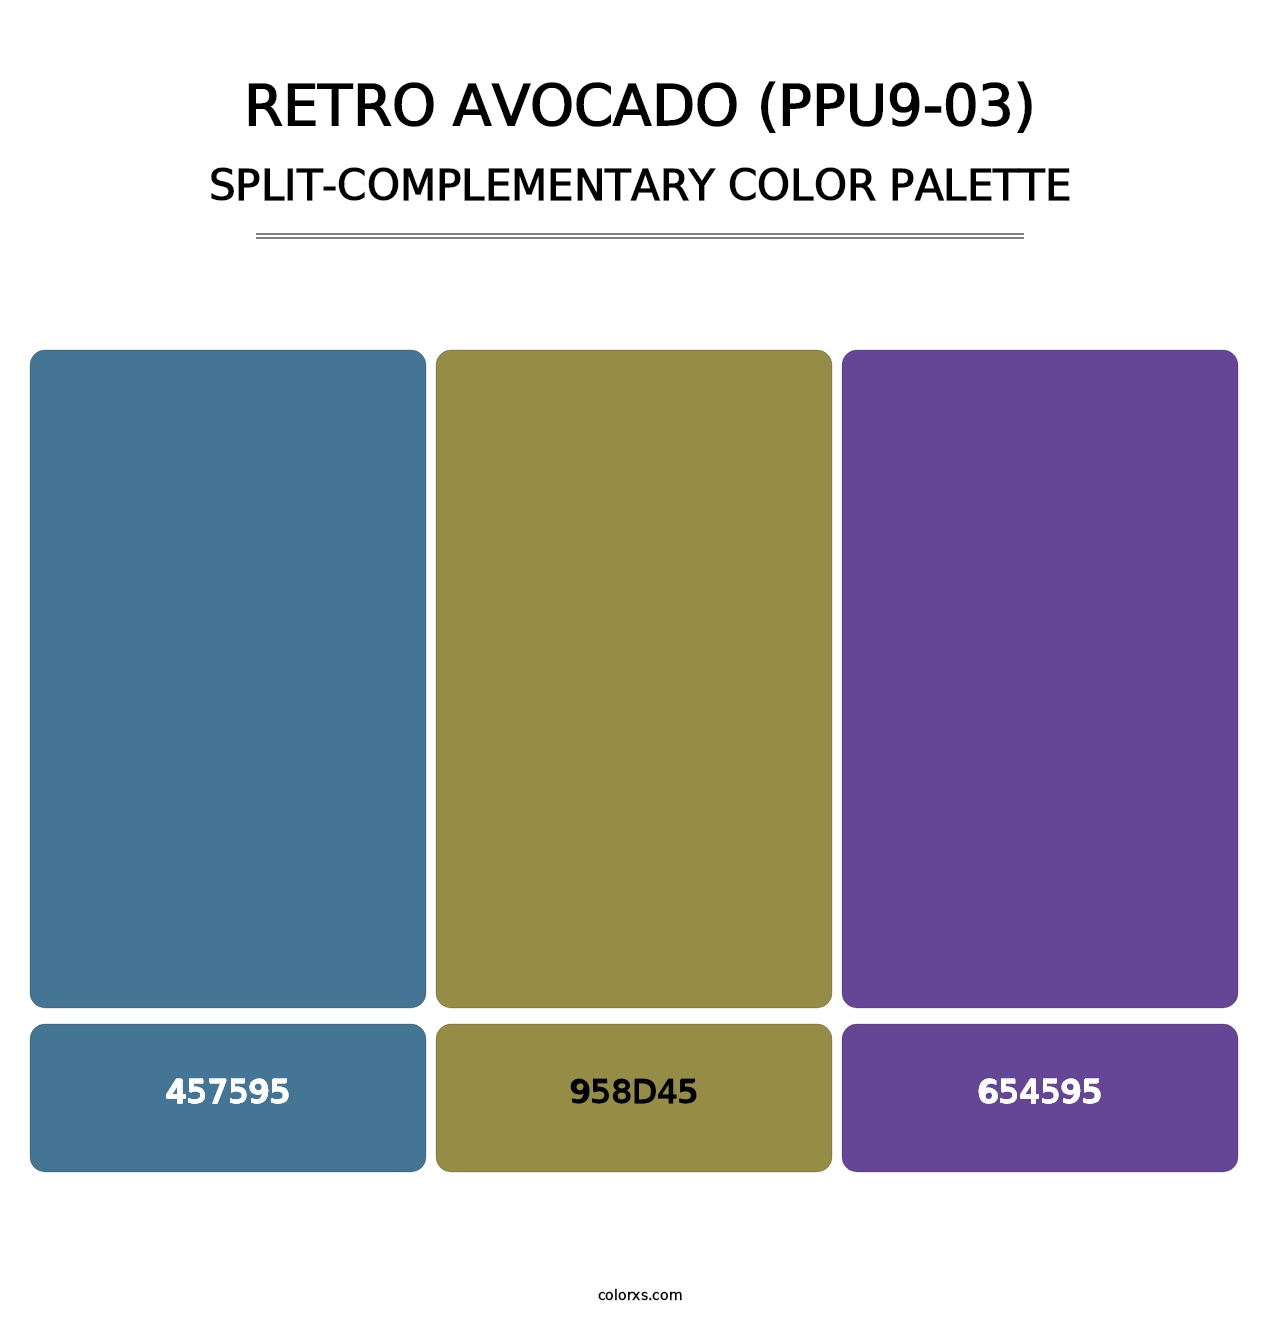 Retro Avocado (PPU9-03) - Split-Complementary Color Palette